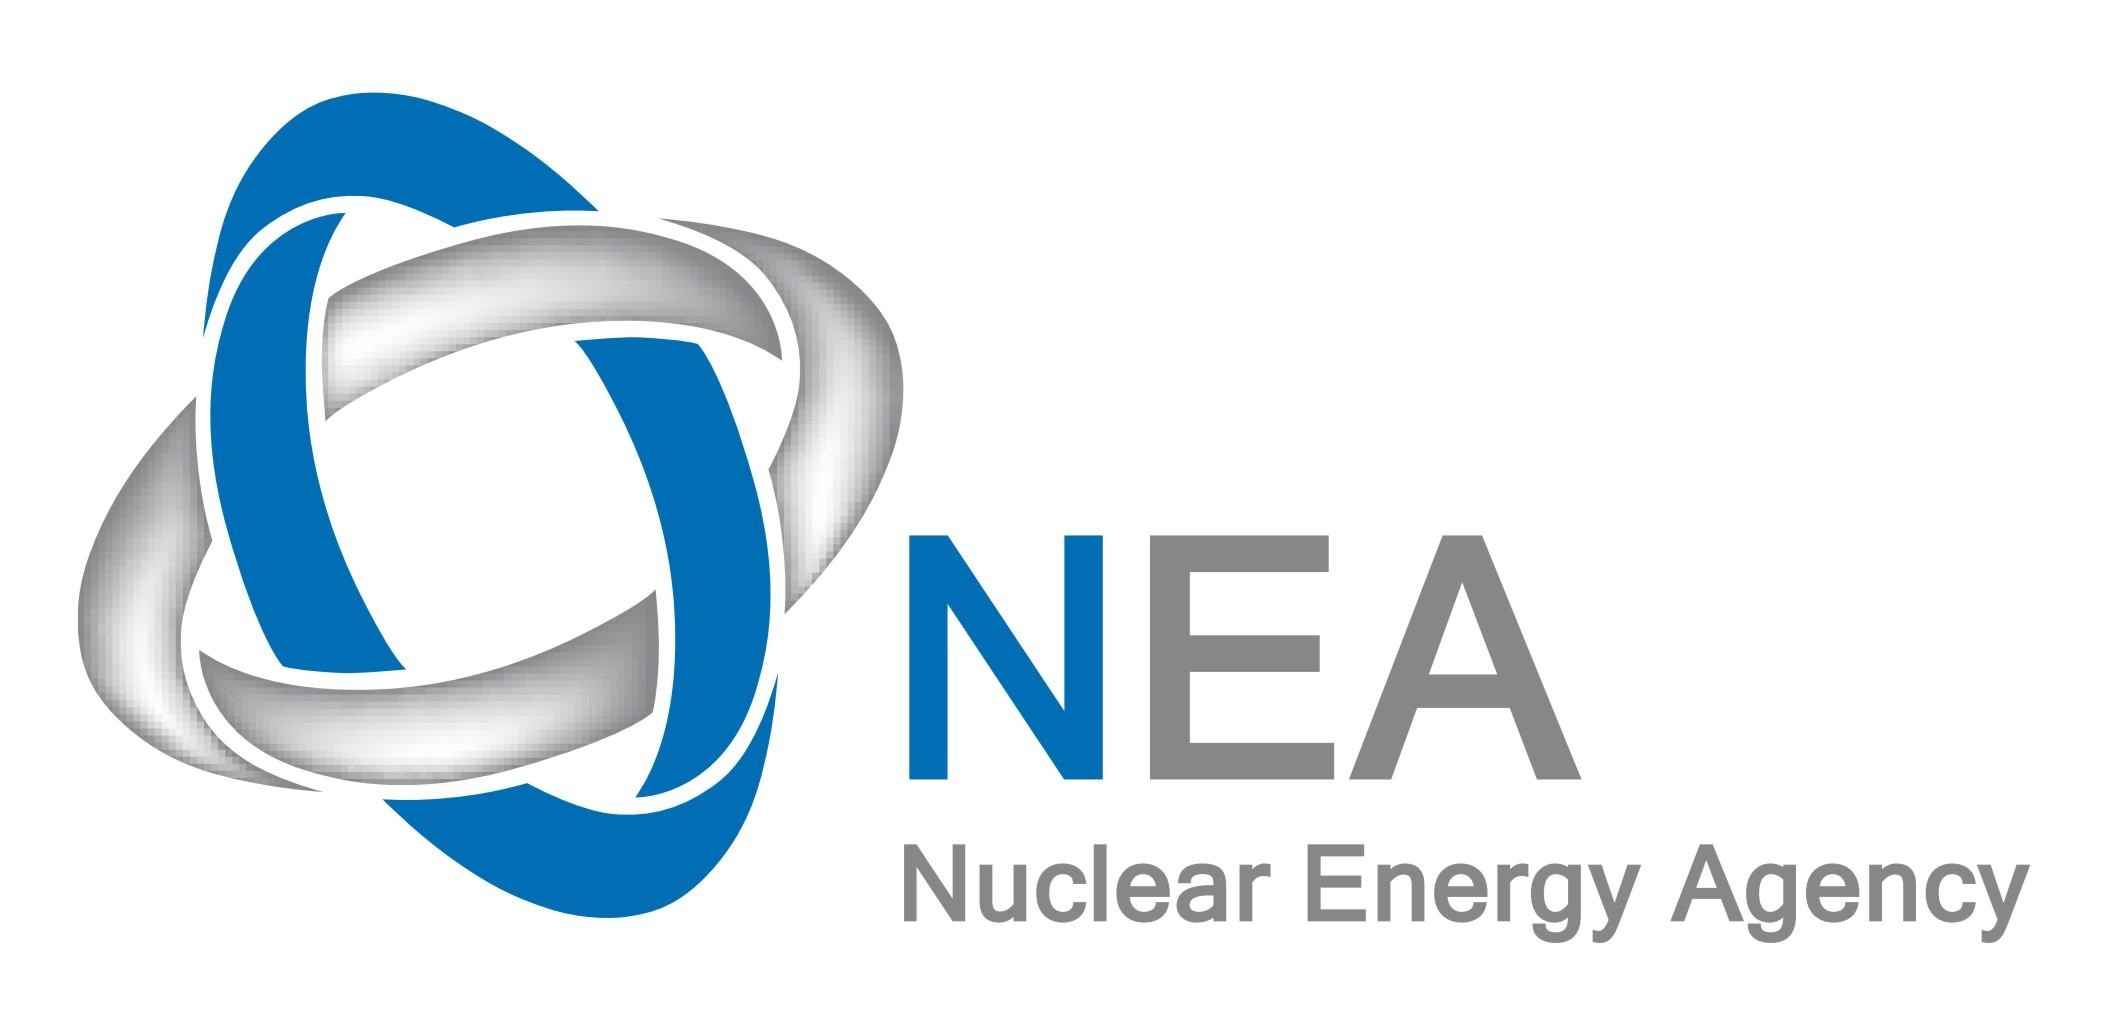 NEA - Nuclear Energy Agency Logo [PDF]